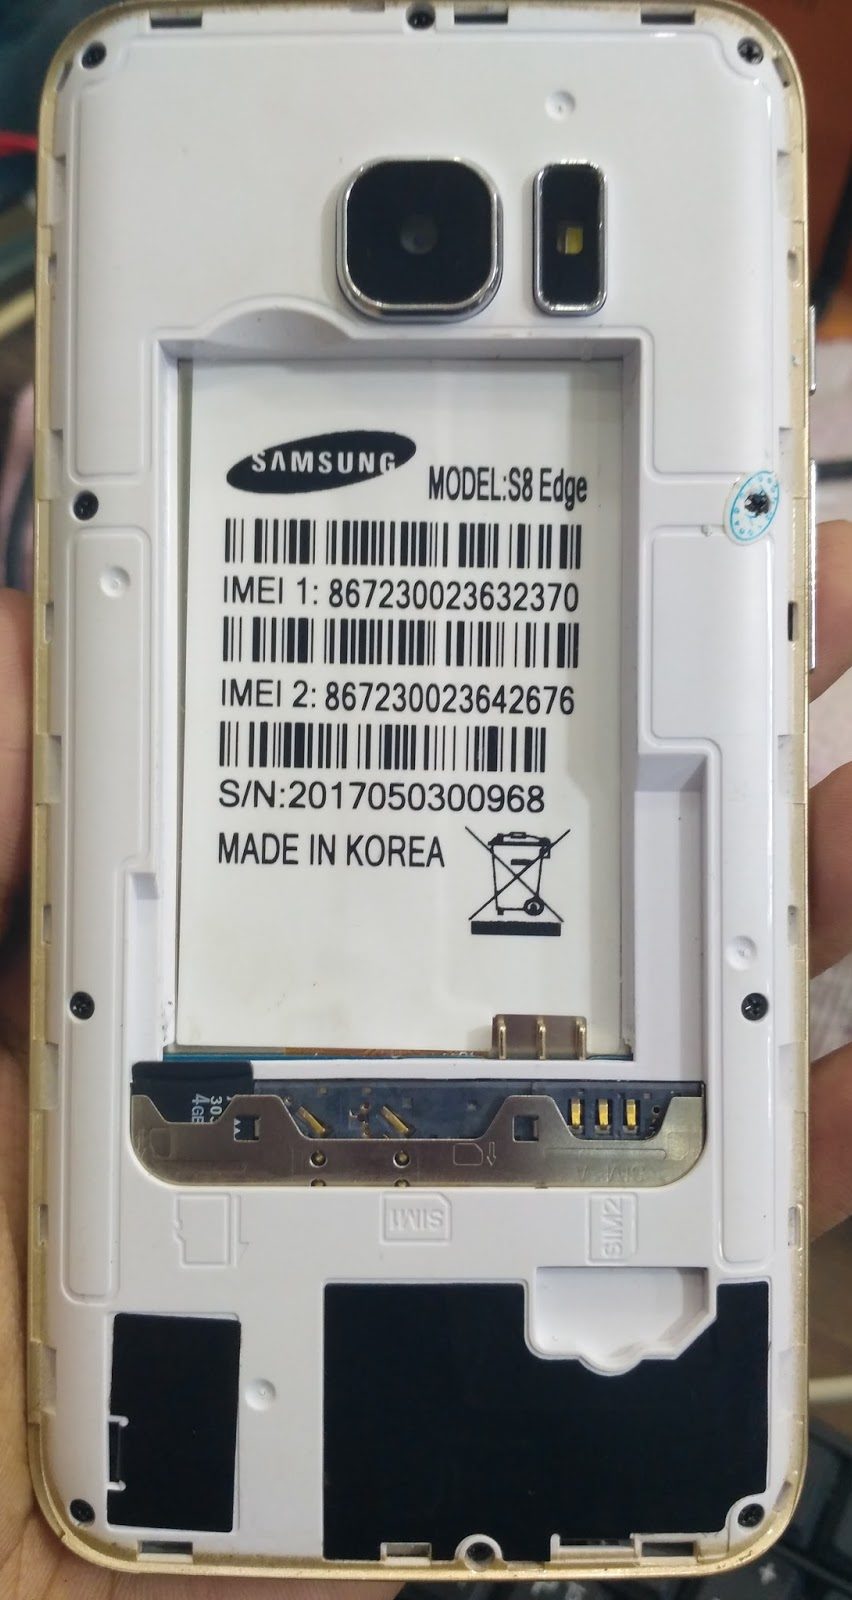 Samsung Clone S8 Edge Flash File